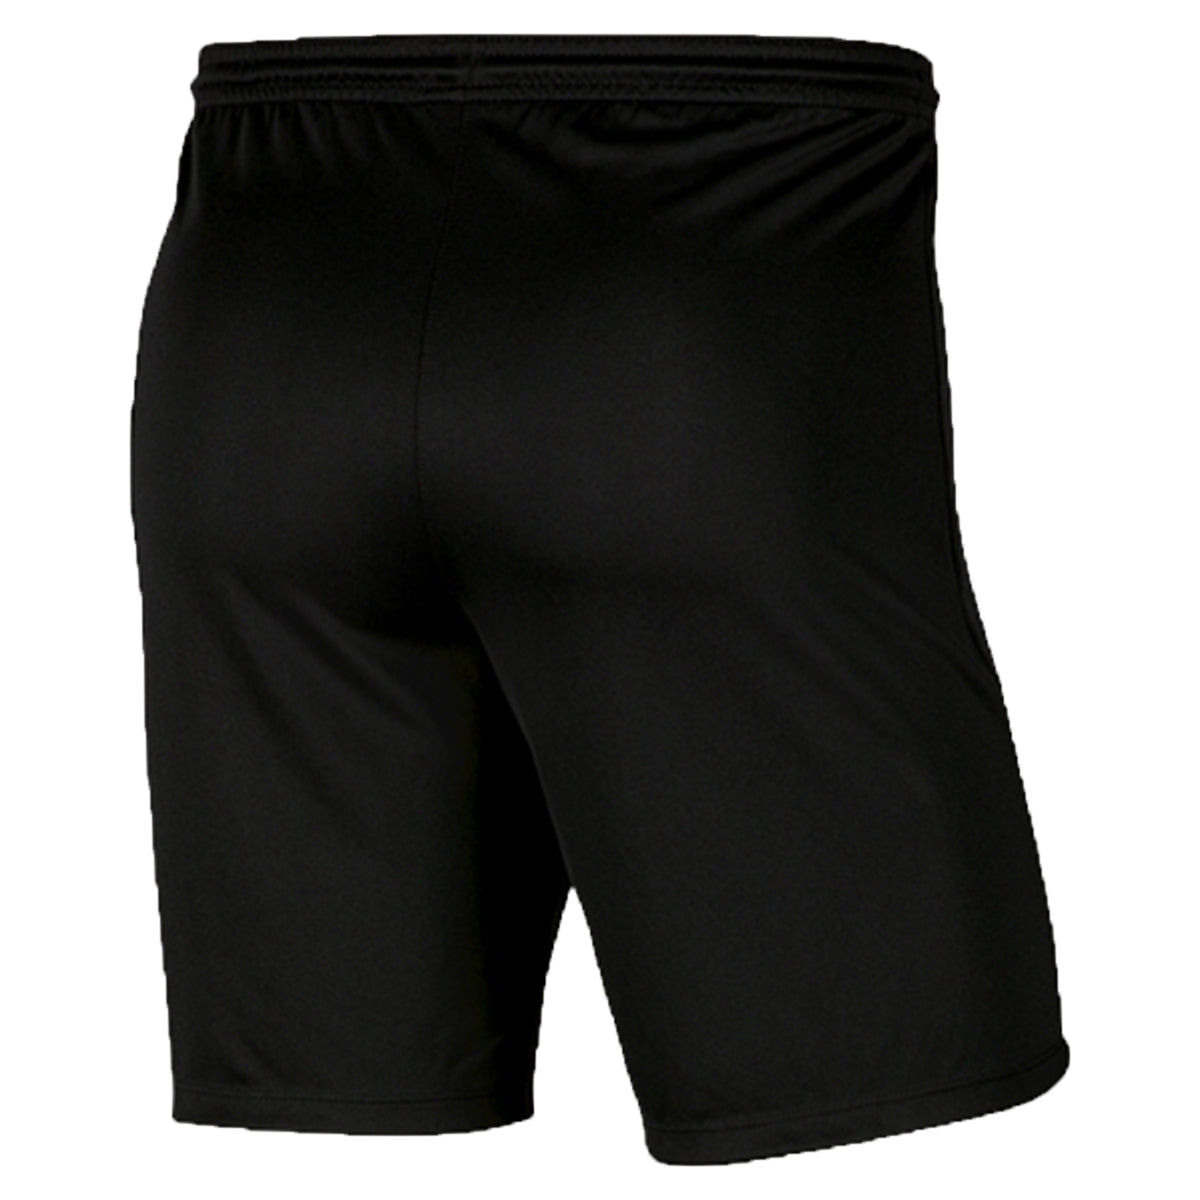 Nike Dri-fit Training Shorts Mens Style : Bv6855